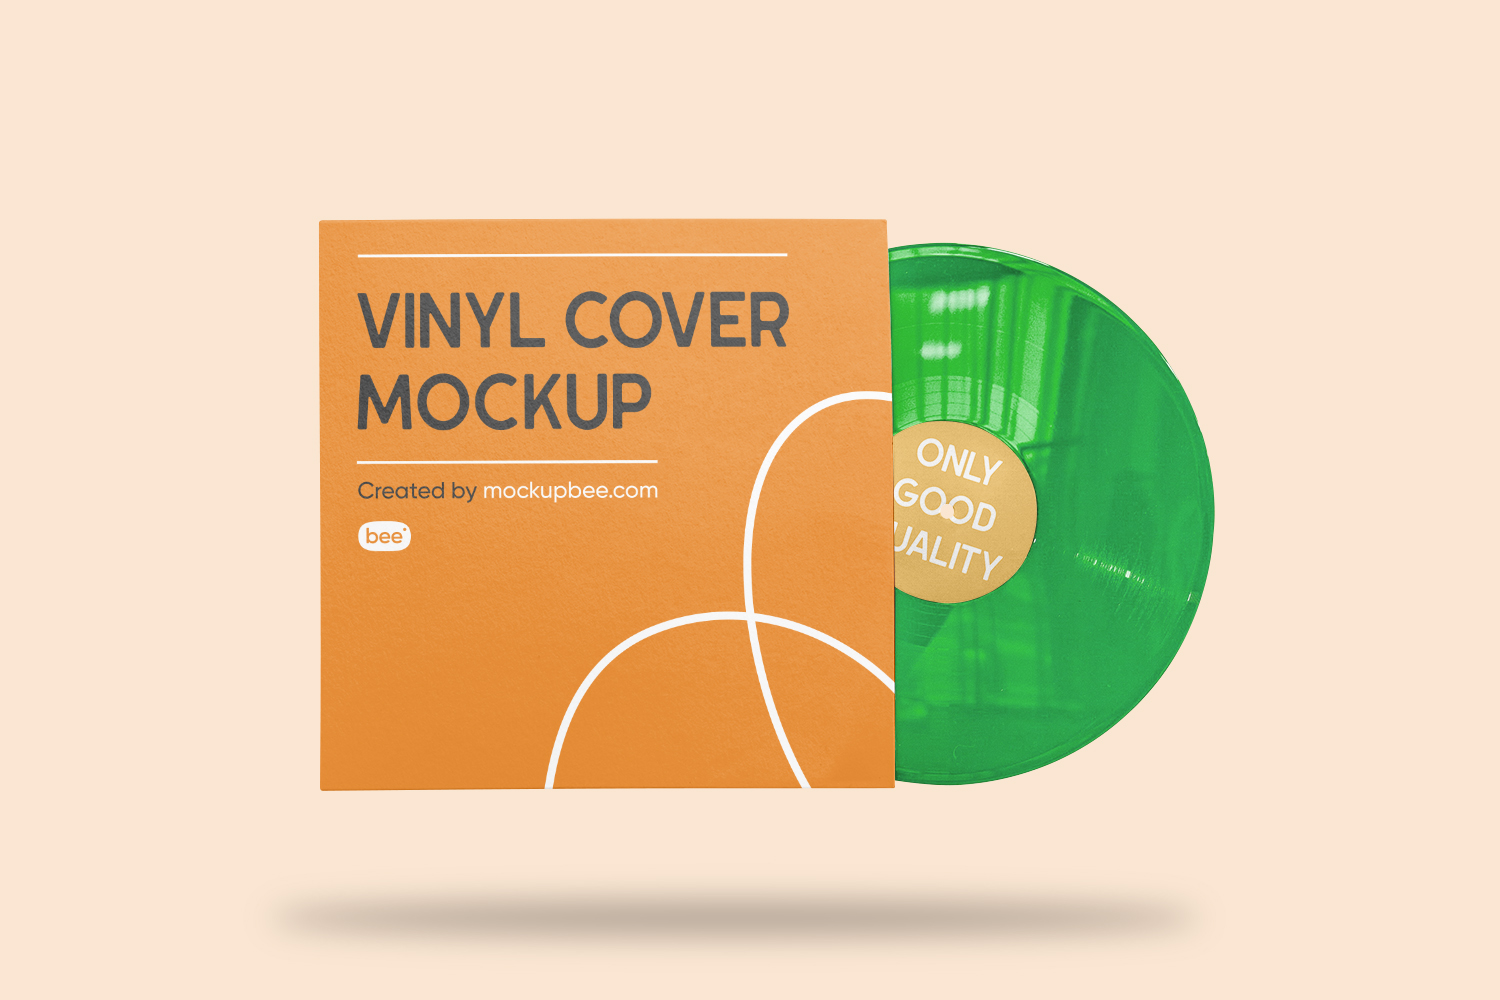 Vinyl Cover Free Mockup